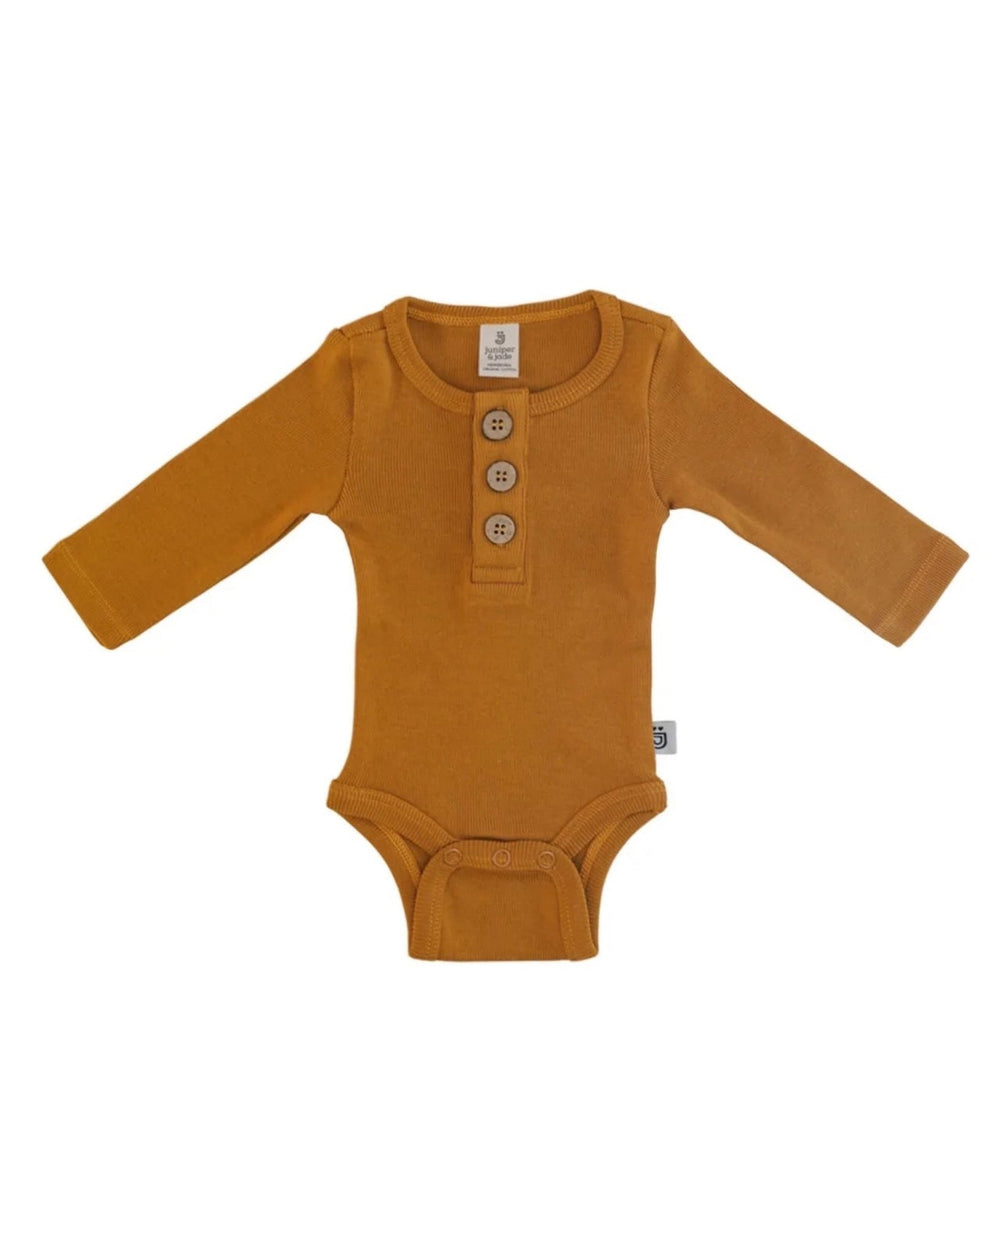 Organic 3 Button Bodysuit, Cinnamon - Baby & Toddler Clothing - LUCKY PANDA KIDS